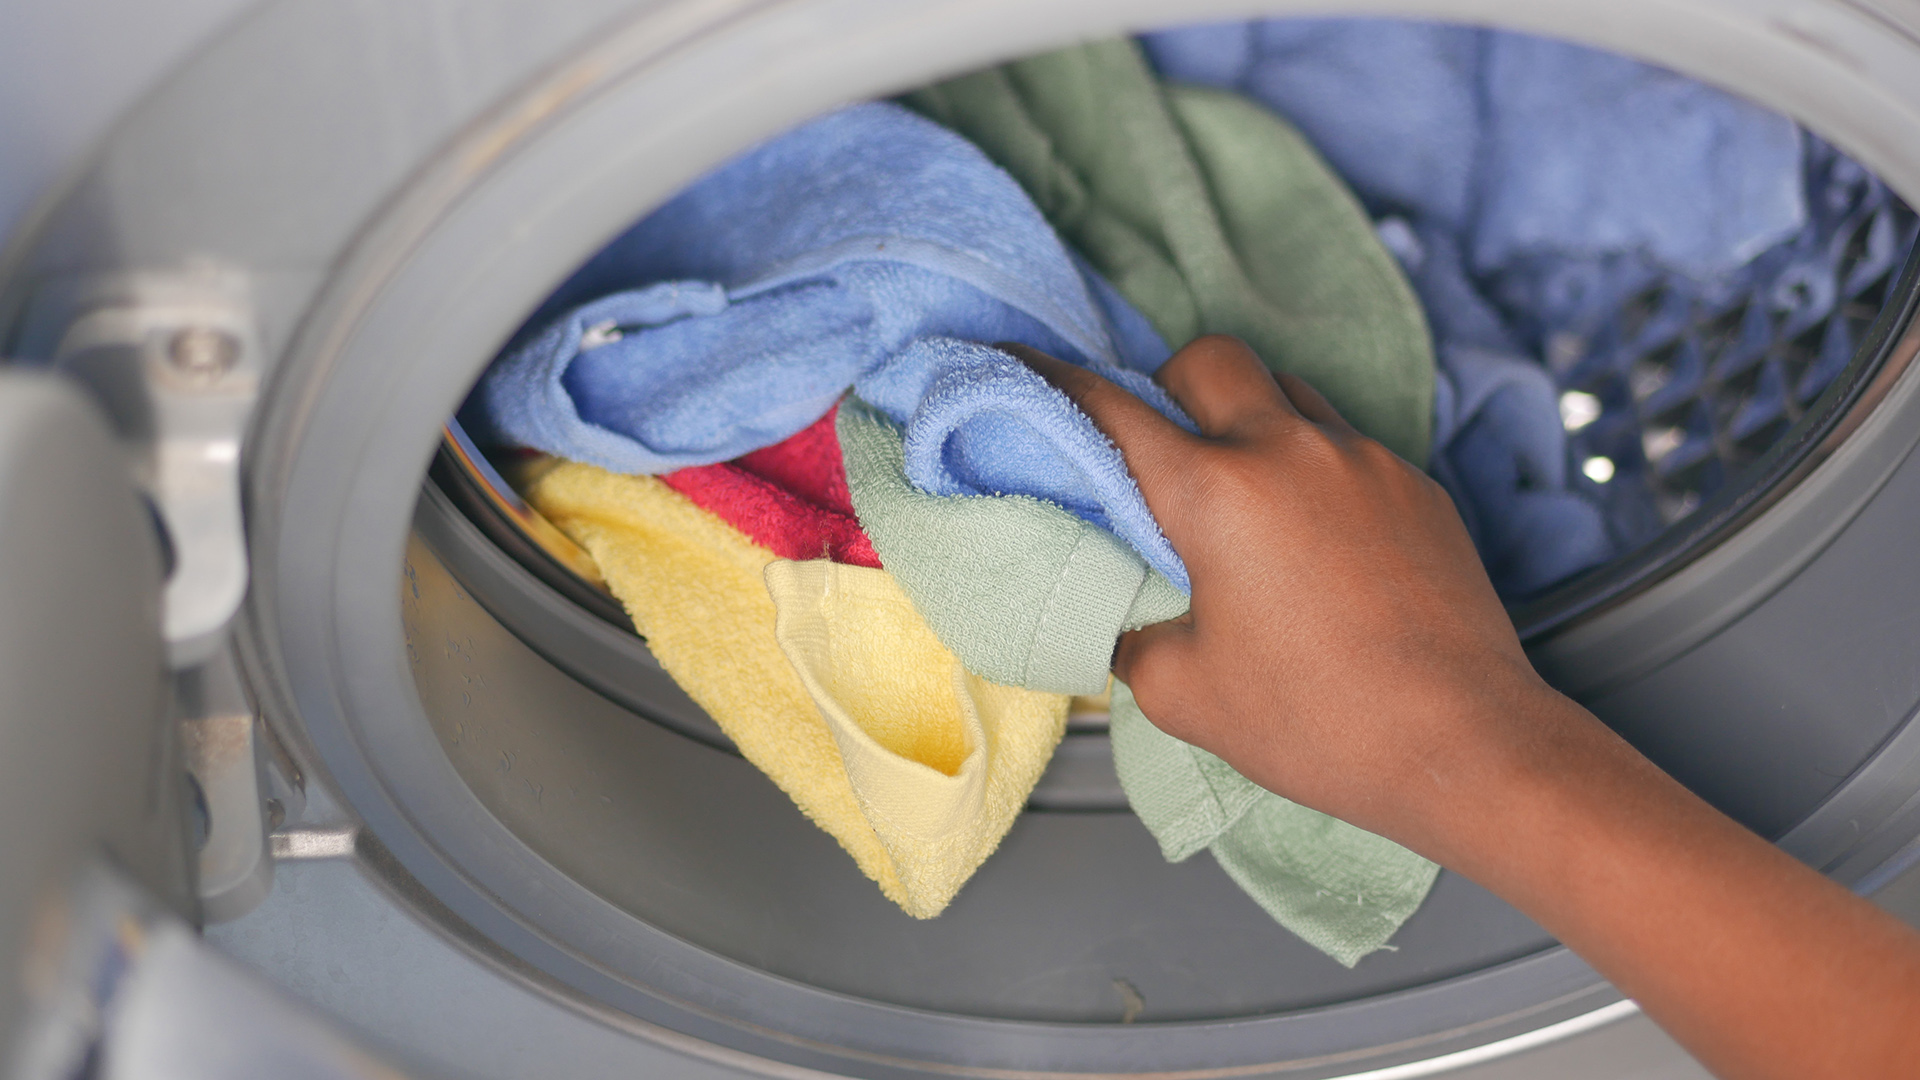 putting towel and cloths in a washing machine 2022 11 29 01 15 38 utc